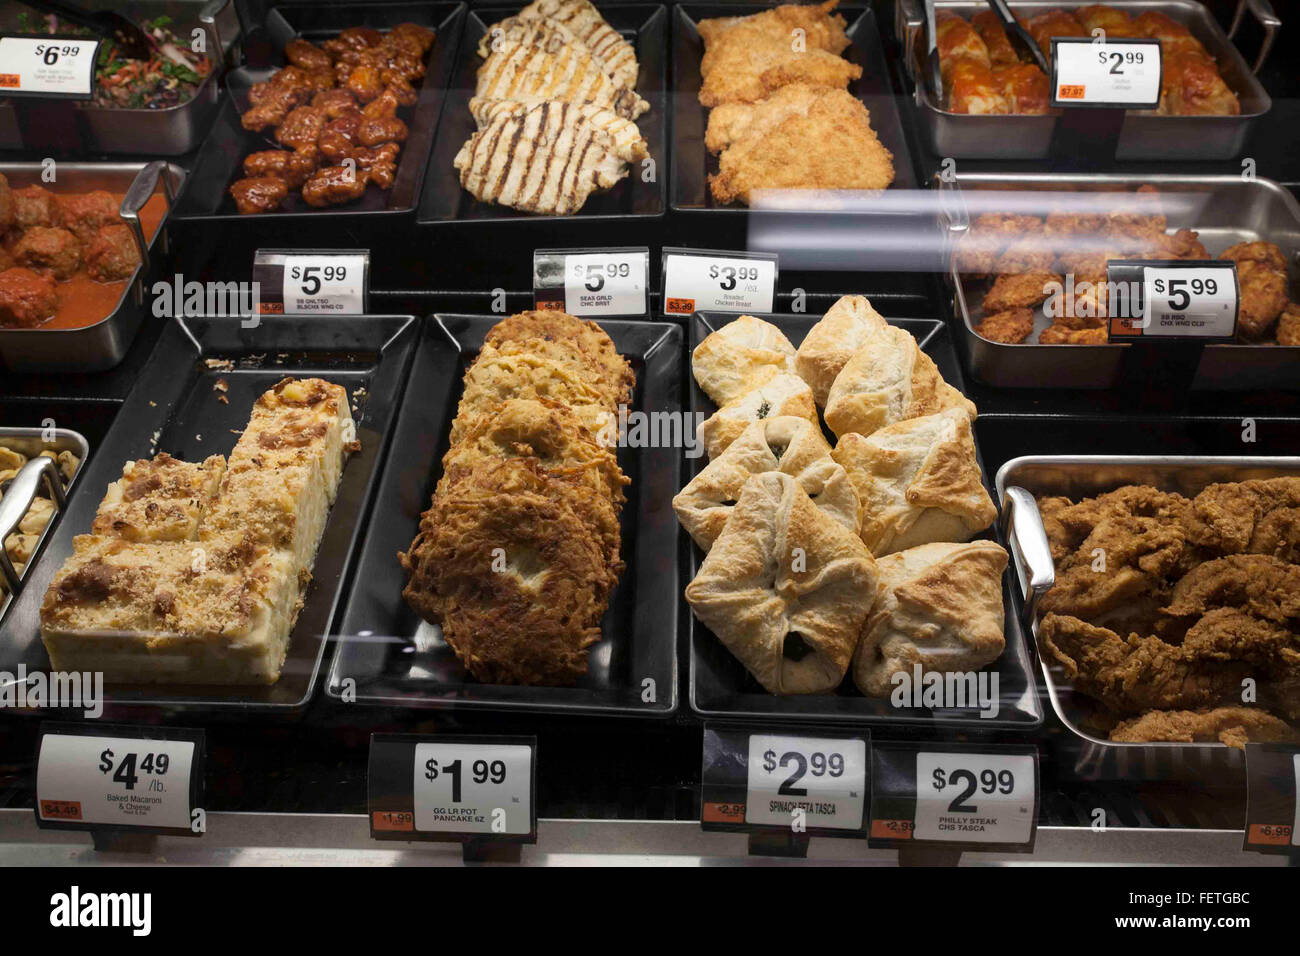 https://c8.alamy.com/comp/FETGBC/prepared-foods-in-deli-counter-at-supermarket-in-massachusetts-FETGBC.jpg